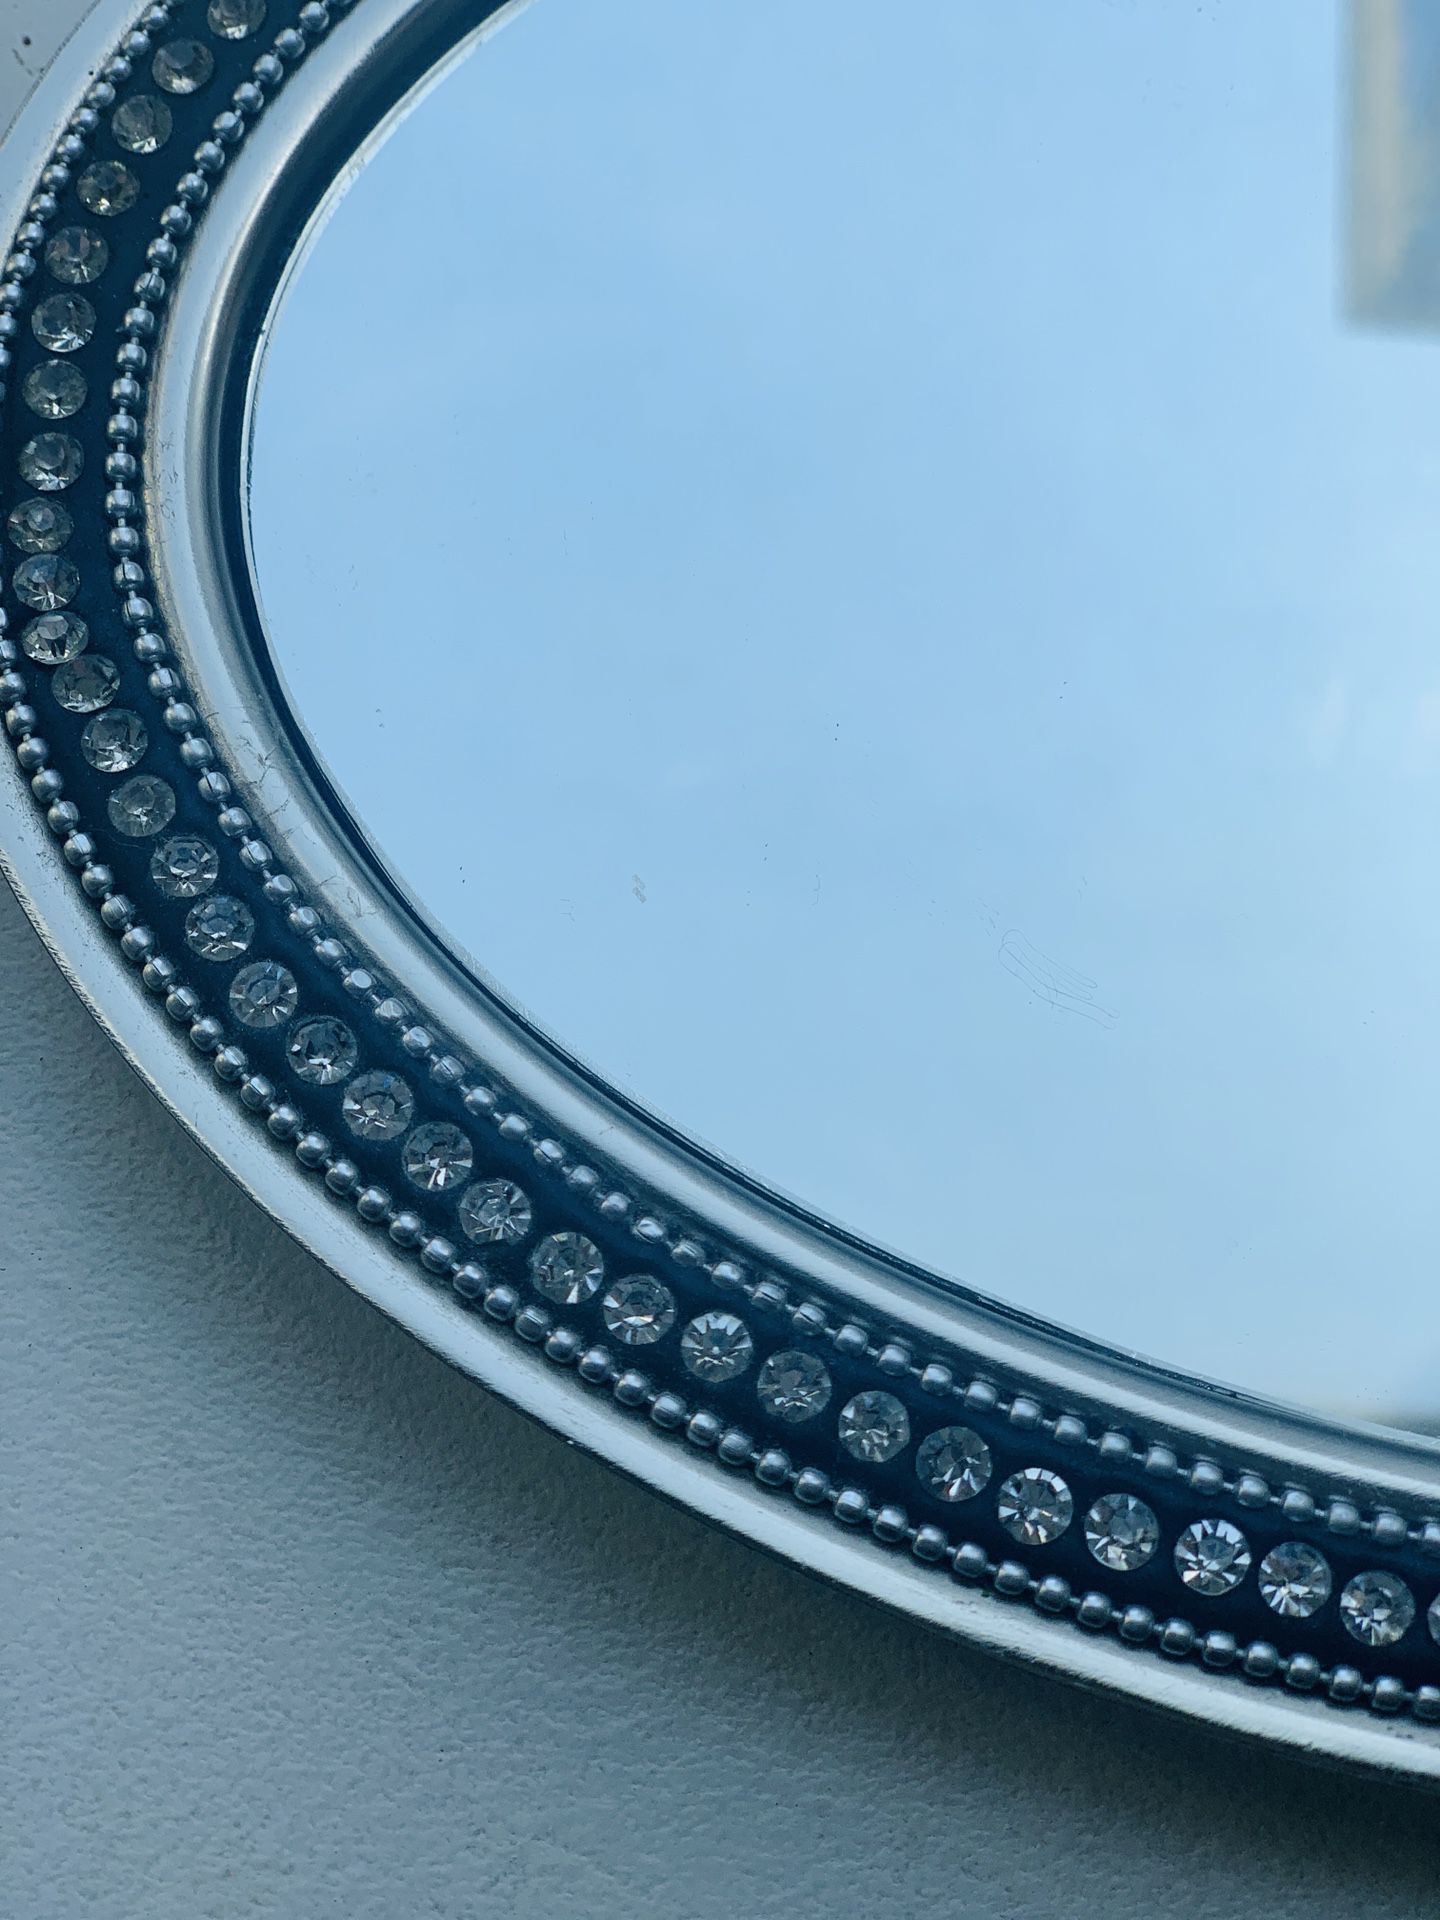 Mirrored Rhinestone Oval Tray